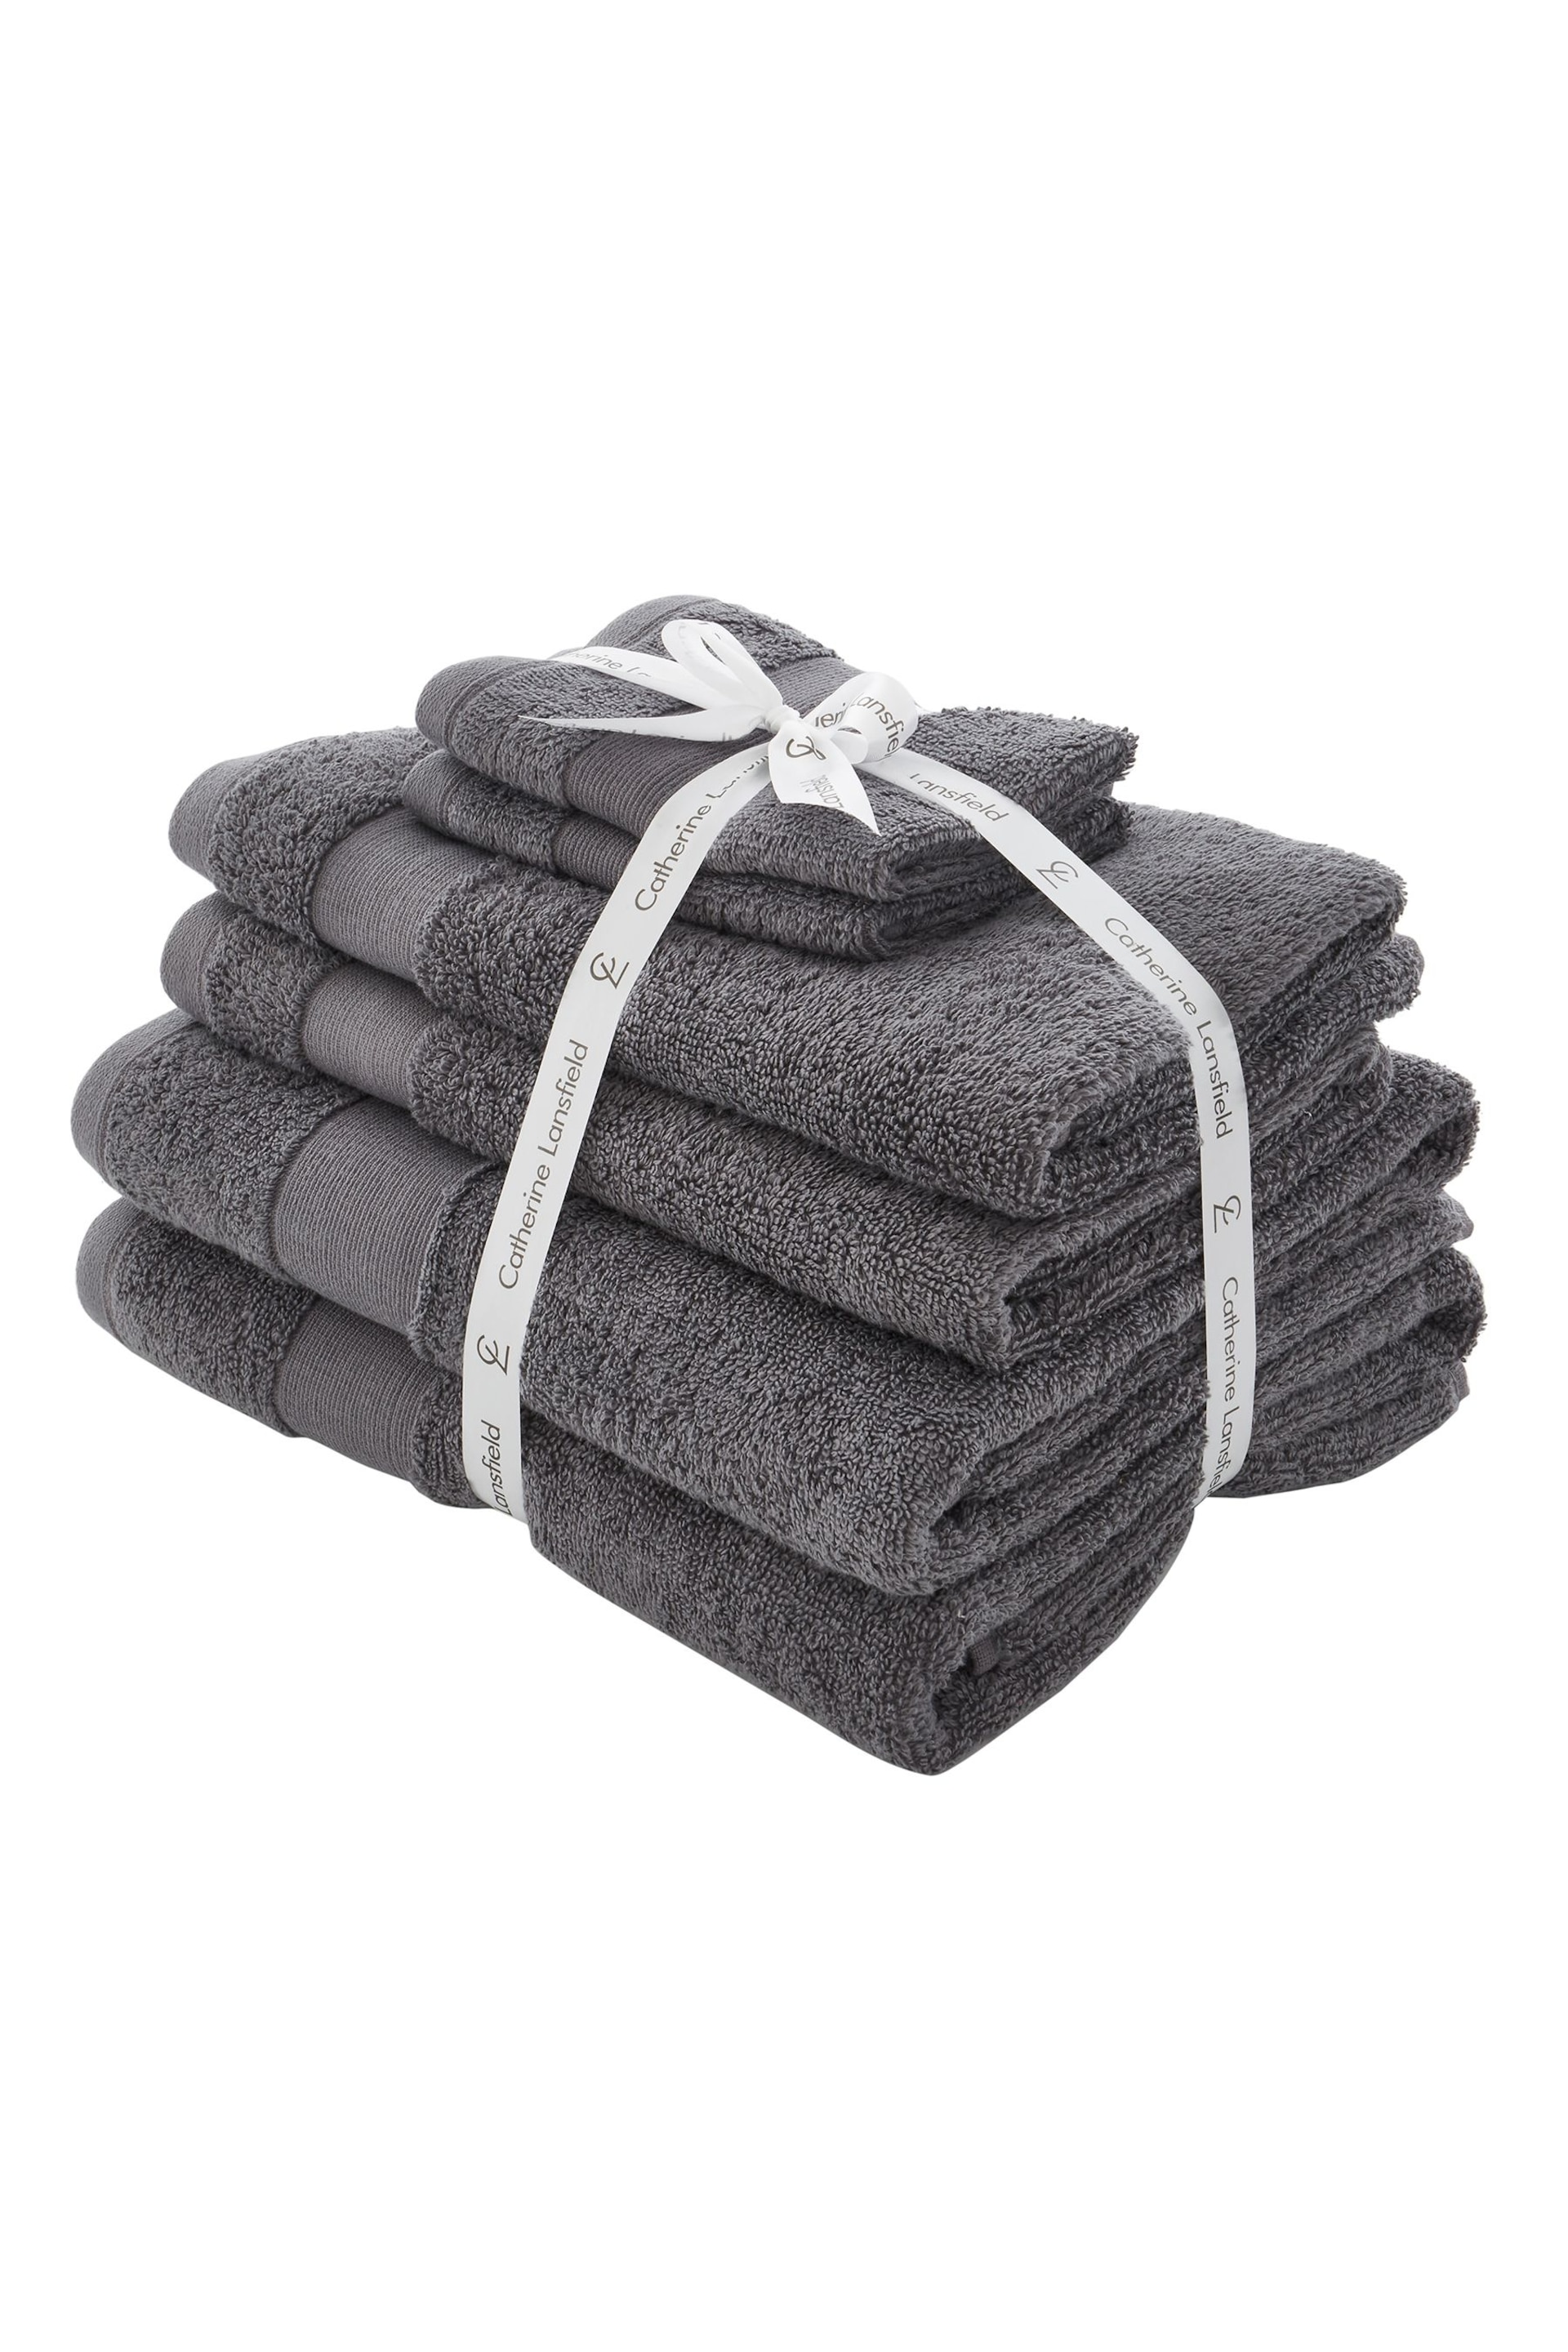 Catherine Lansfield 6 Piece Grey Anti-Bacterial Towel Bale - Image 1 of 5